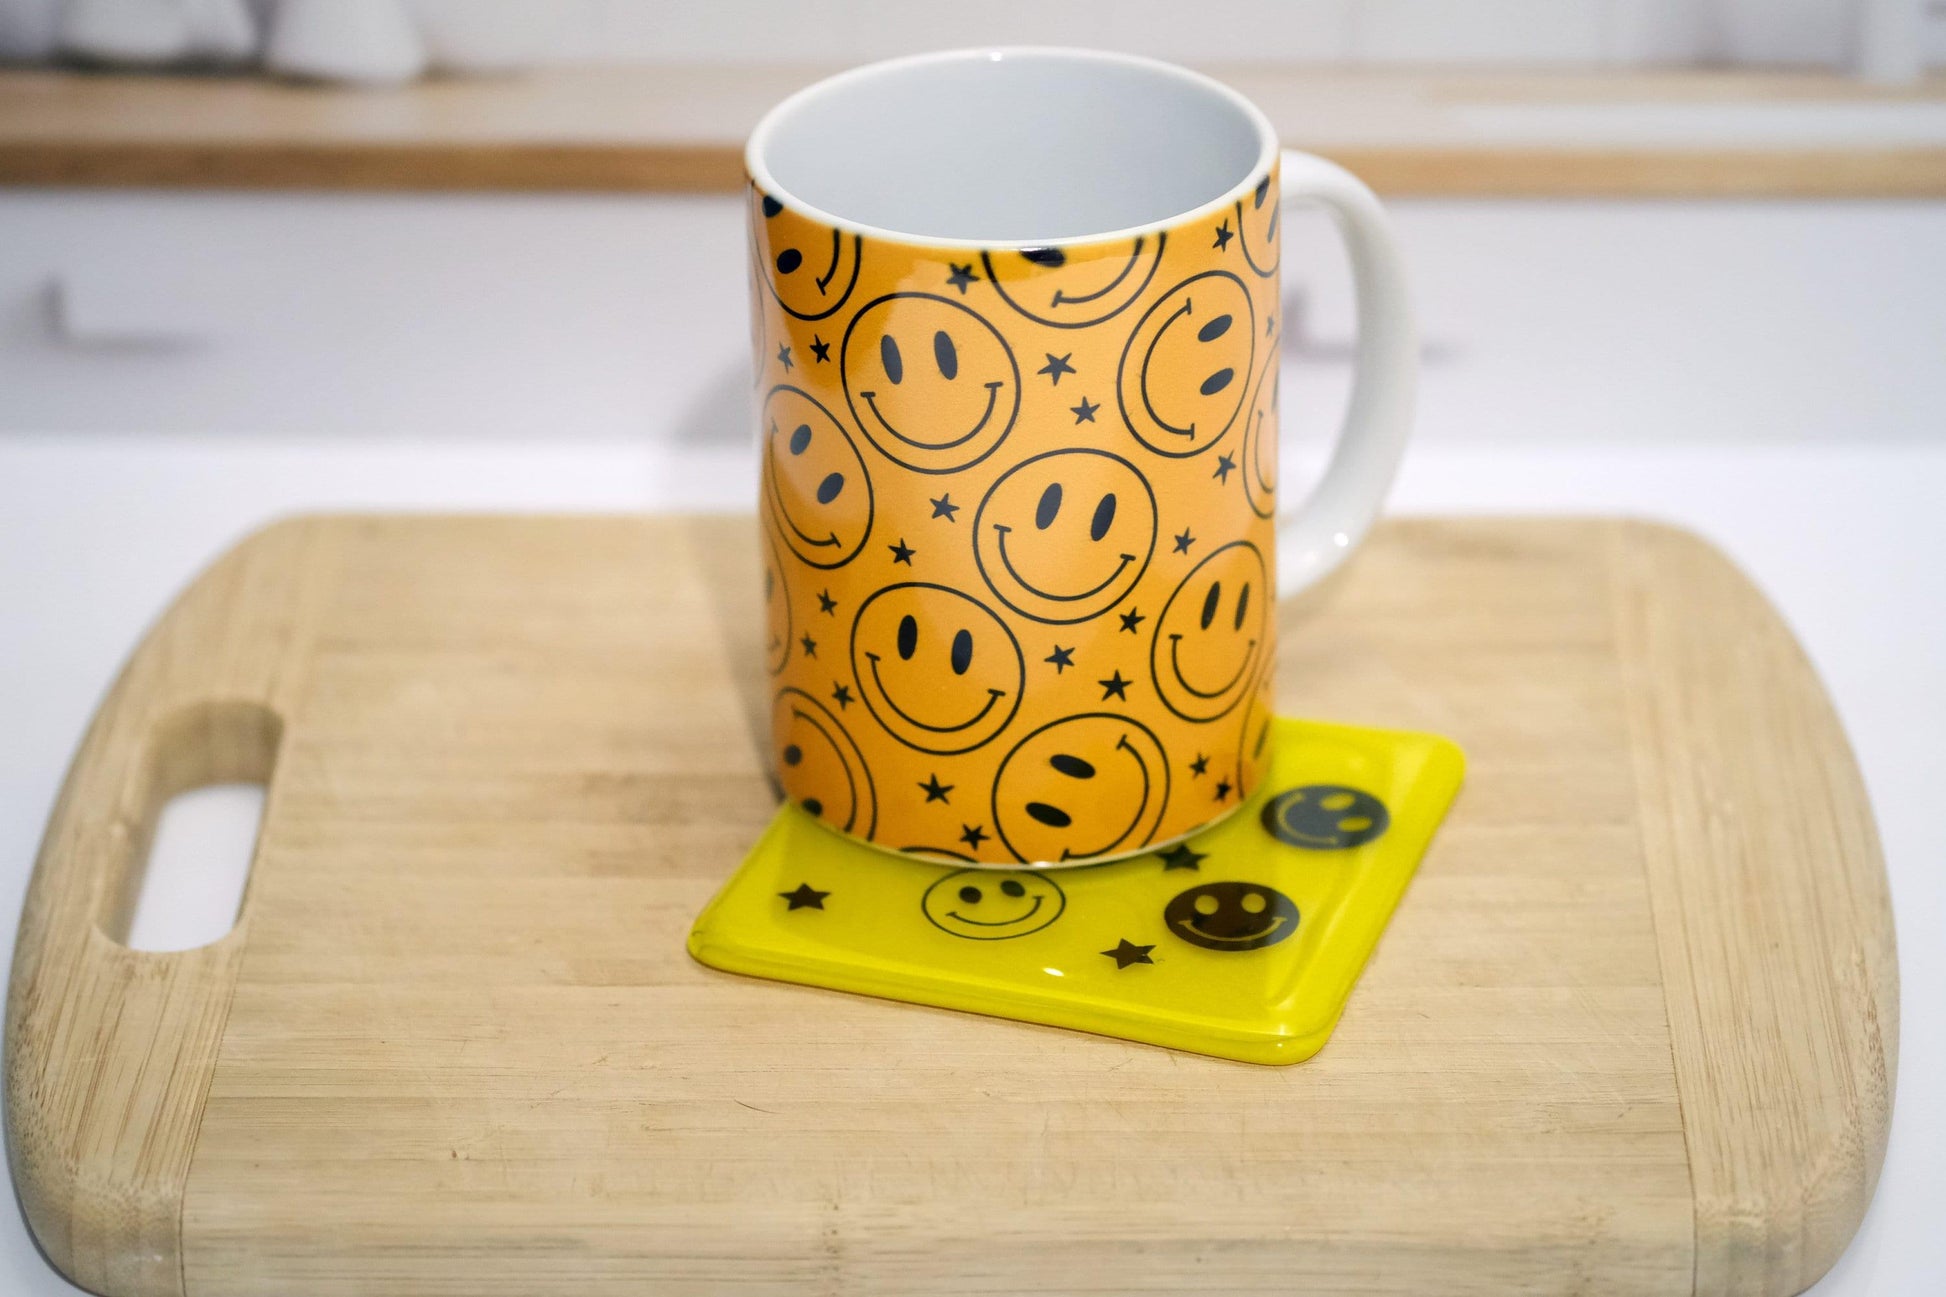 Whimsical Smiley Pattern Combo - 15 oz Mug & Fused Glass Coasters in Orange/Yellow seedsglassworks seeds glassworks